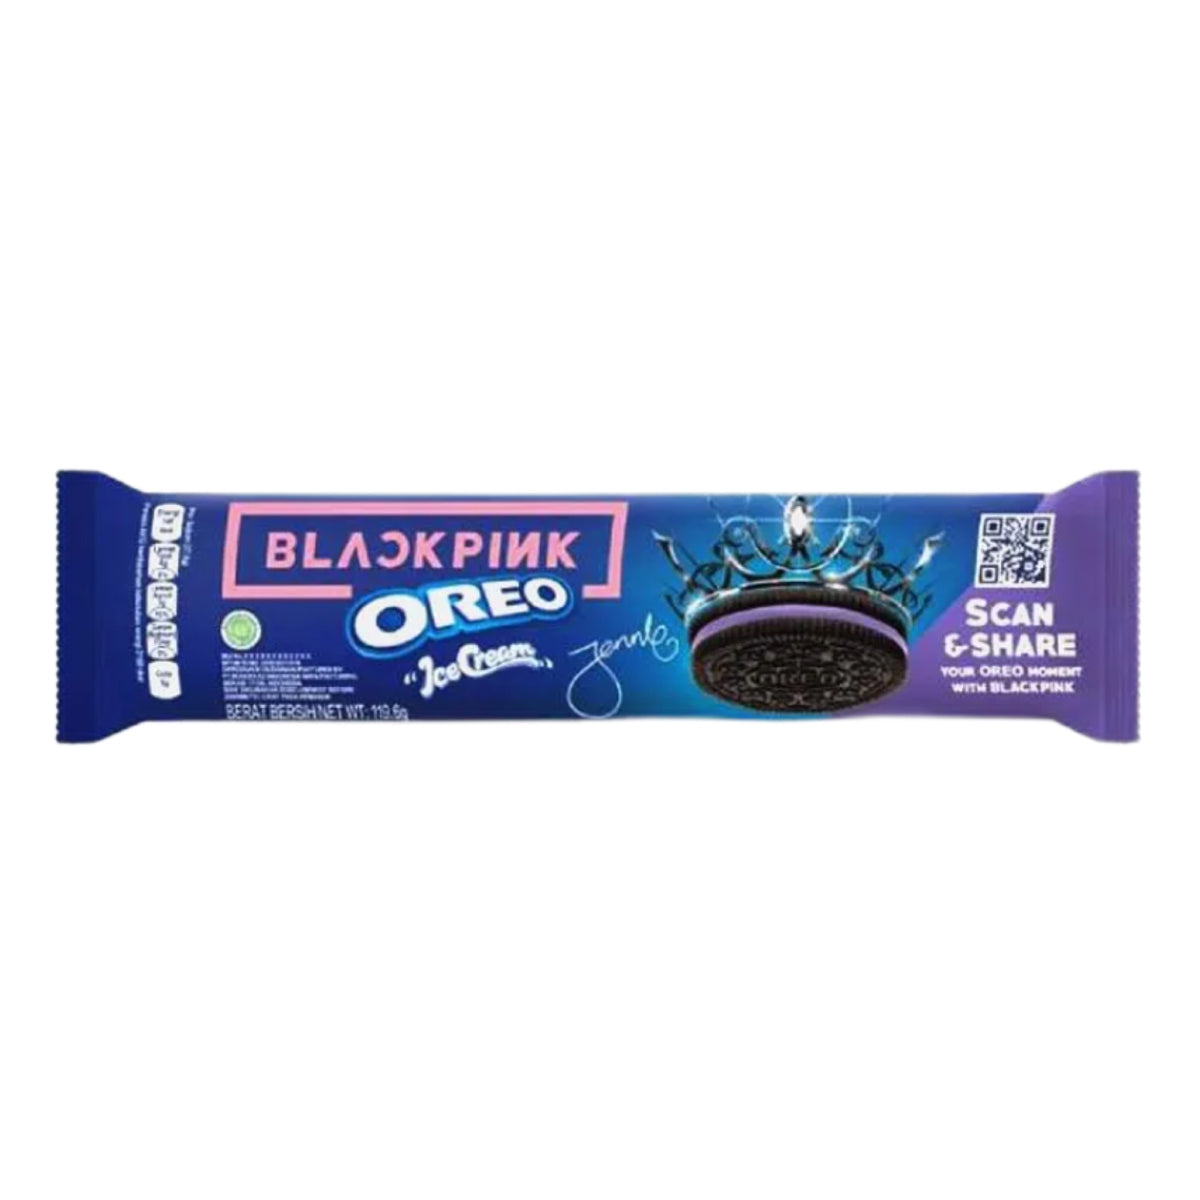 BLACKPINK Oreo Blueberry Ice Cream -Indonesia – So Sweet Canada